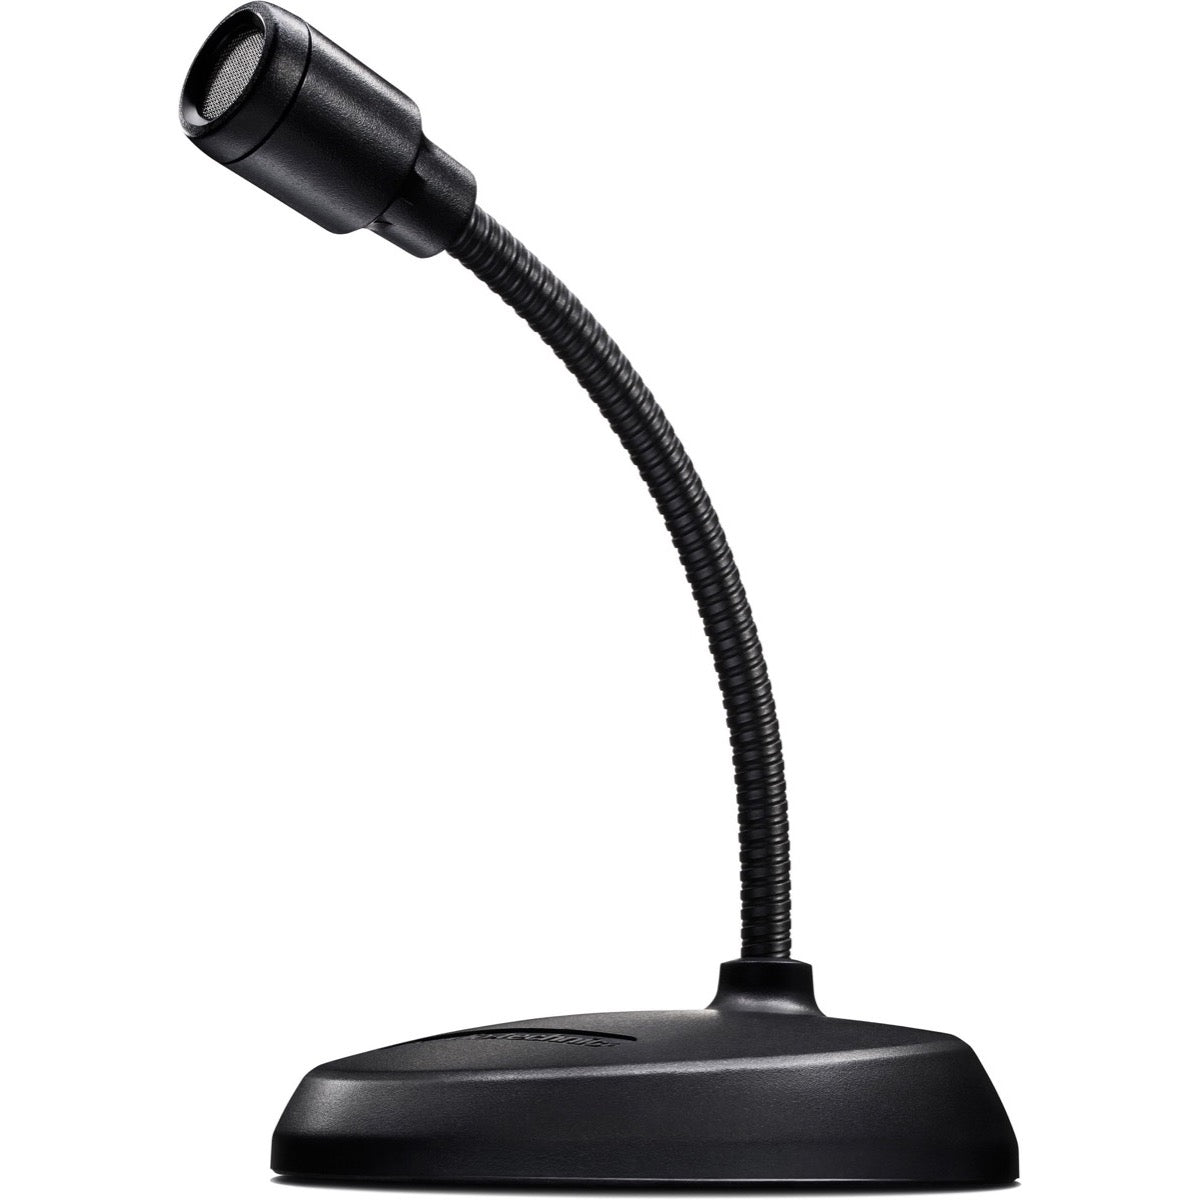 Audio-Technica ATGM1-USB Gaming Desktop Microphone